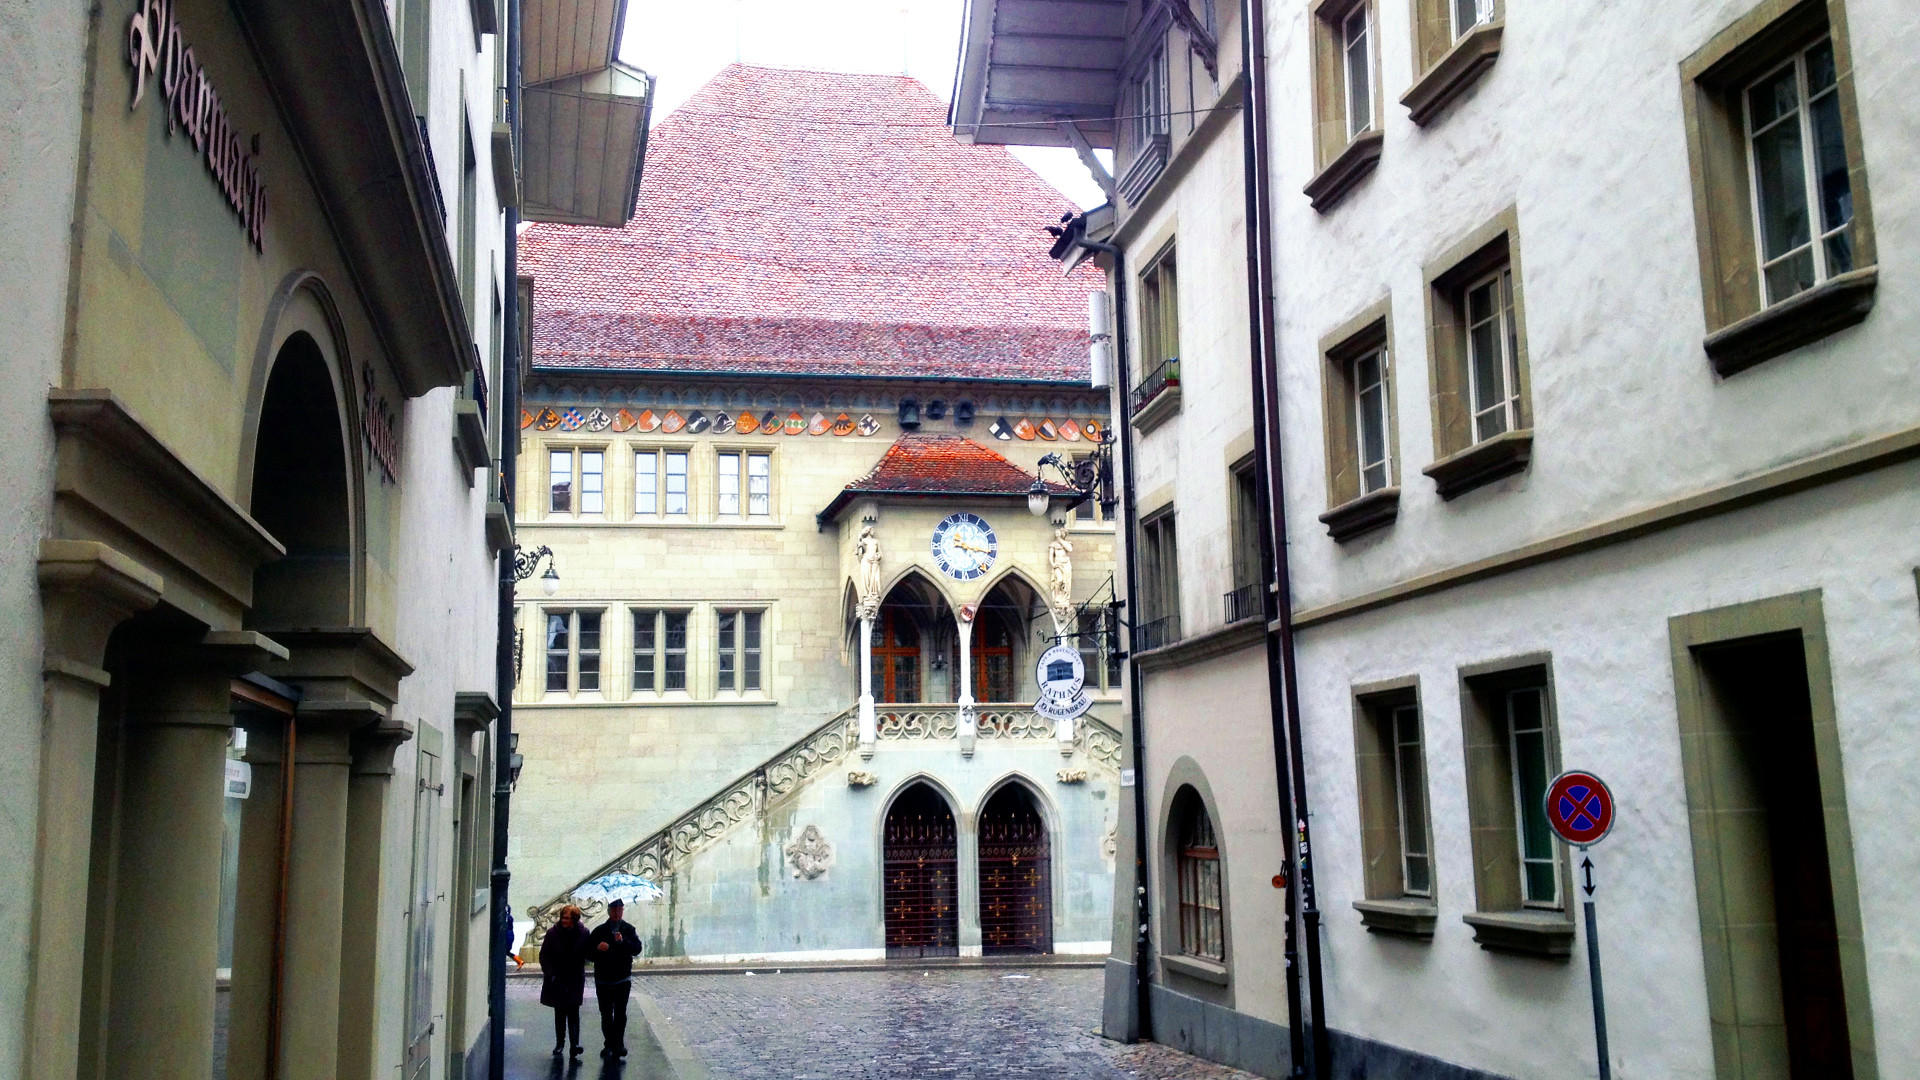 Berner Rathaus